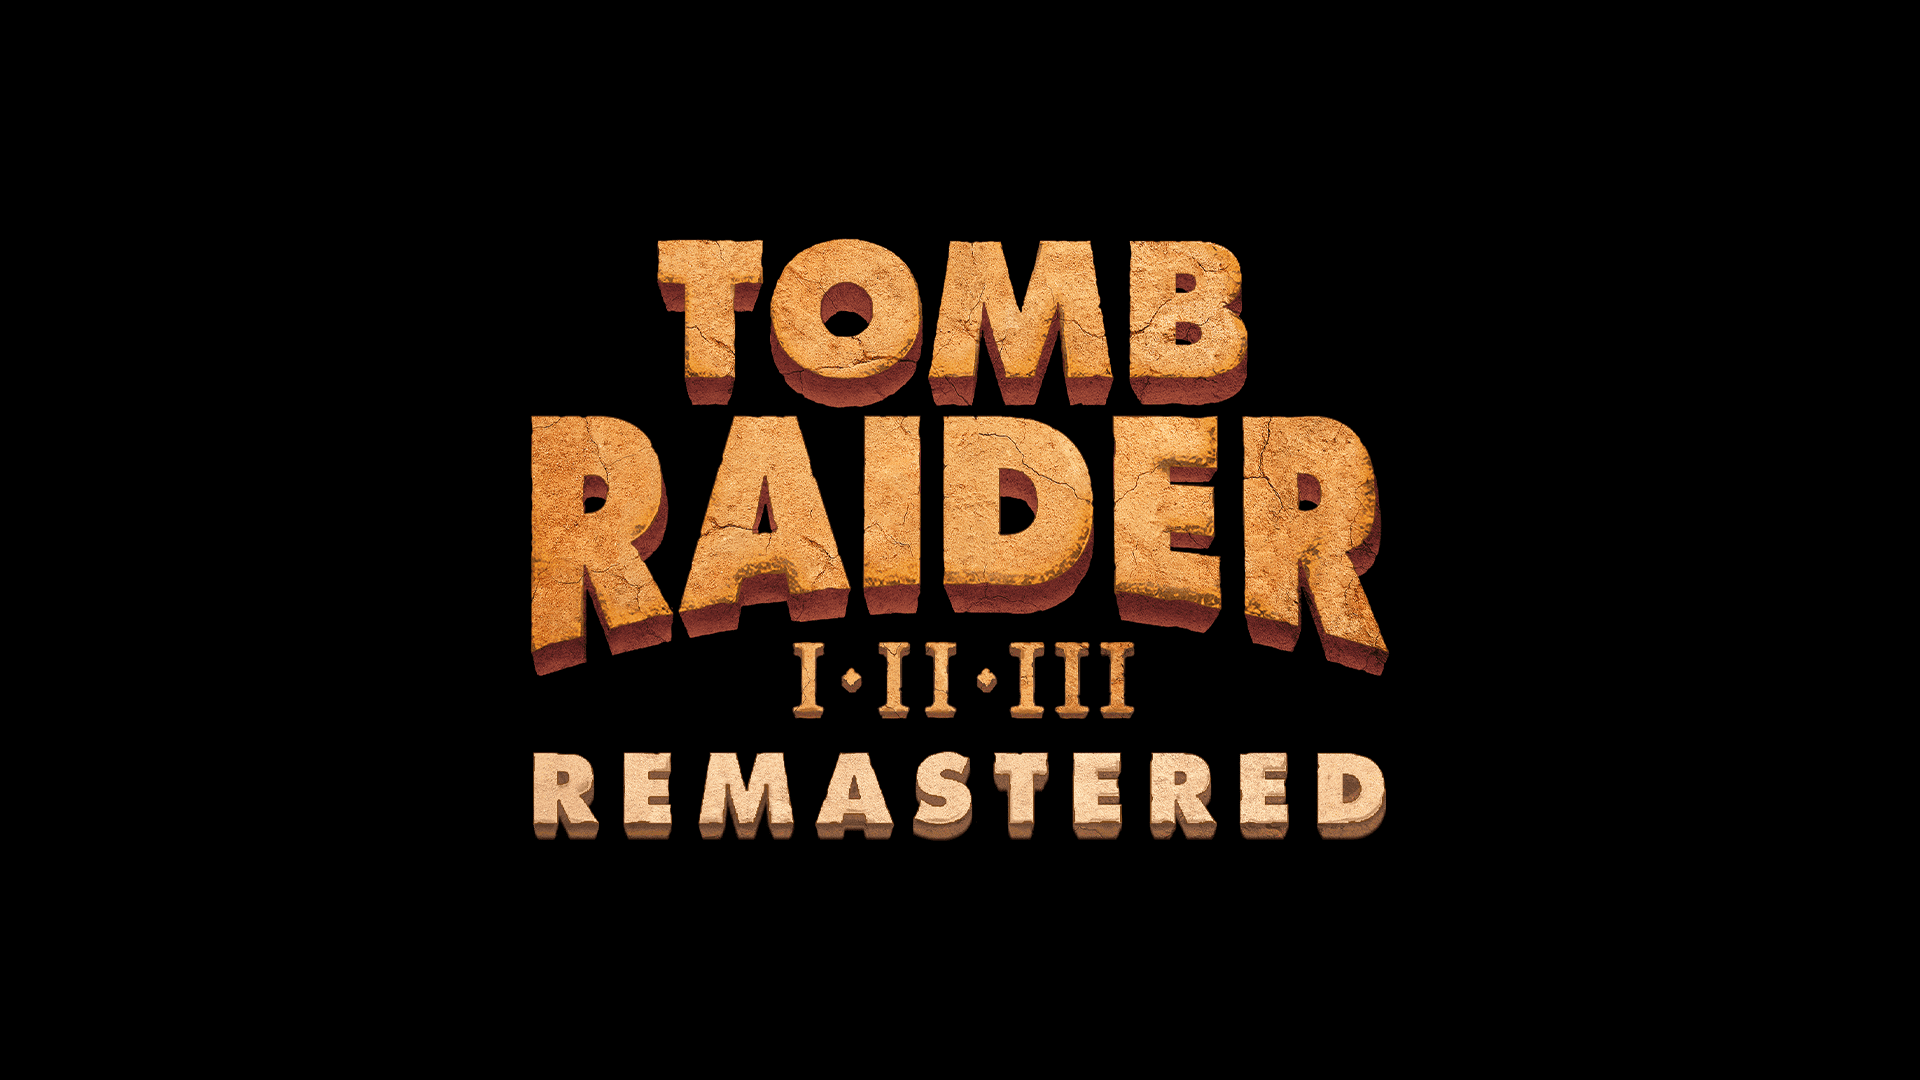 Tomb Raider I-III Remastered Starring Lara Croft (2)